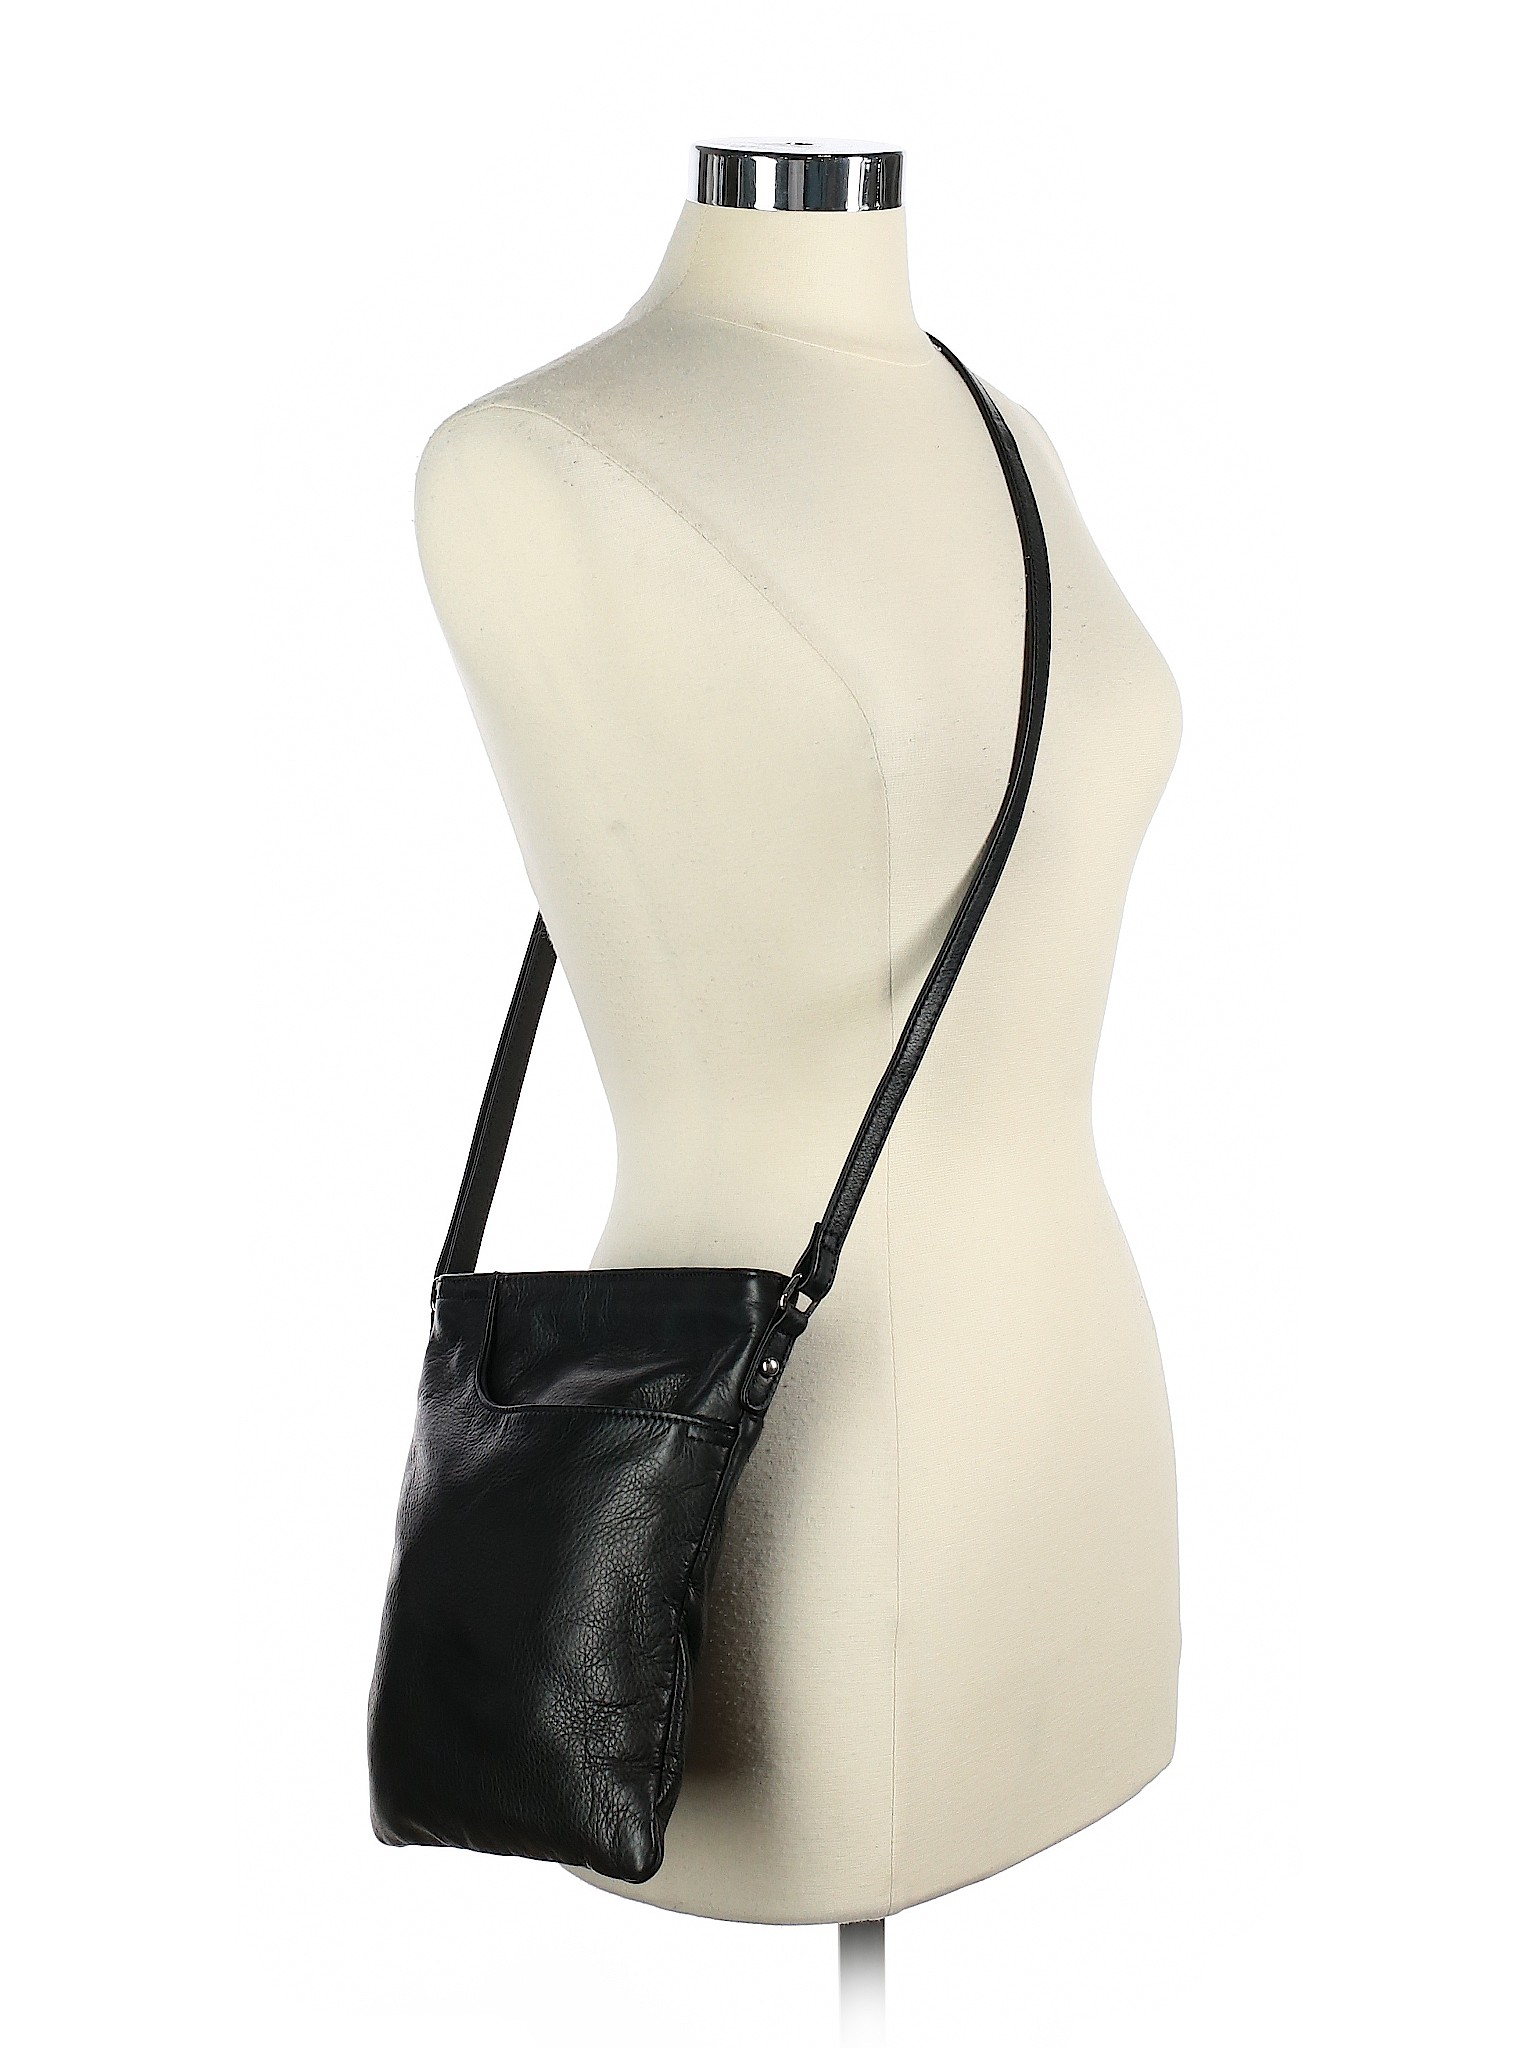 Margot Women Black Leather Crossbody Bag One Size | eBay